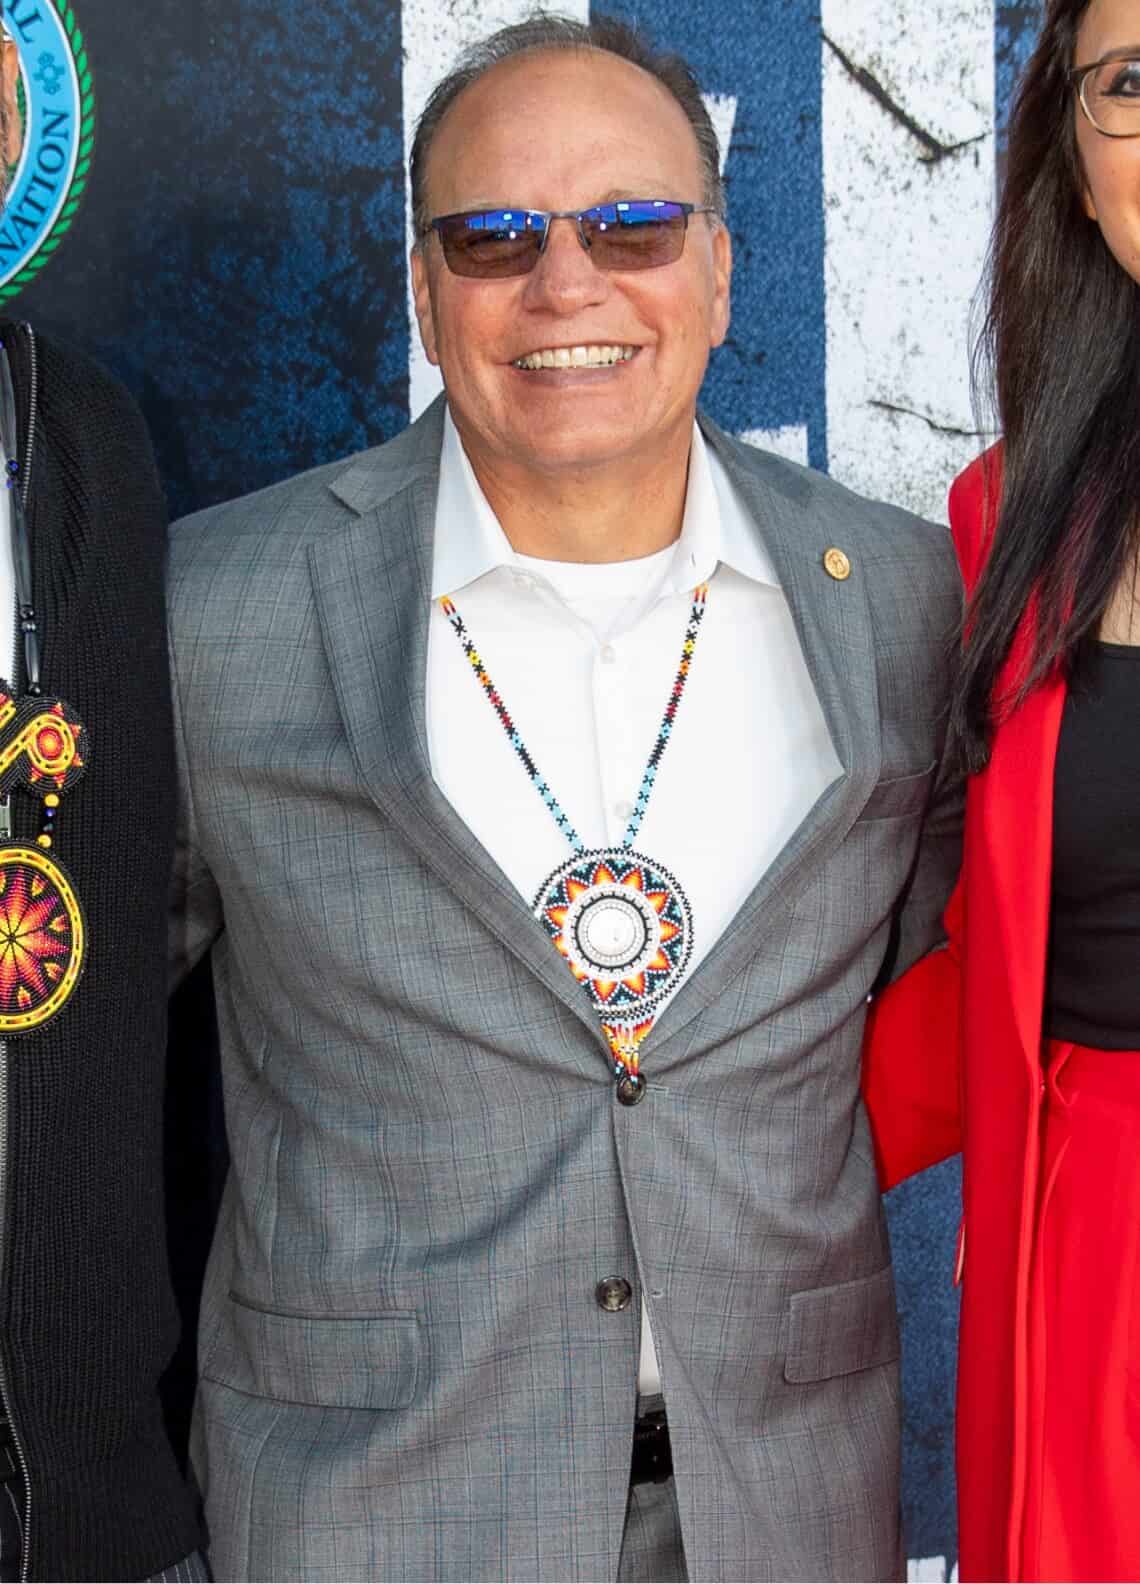 Chief Batton wears a Sun Symbol medallion